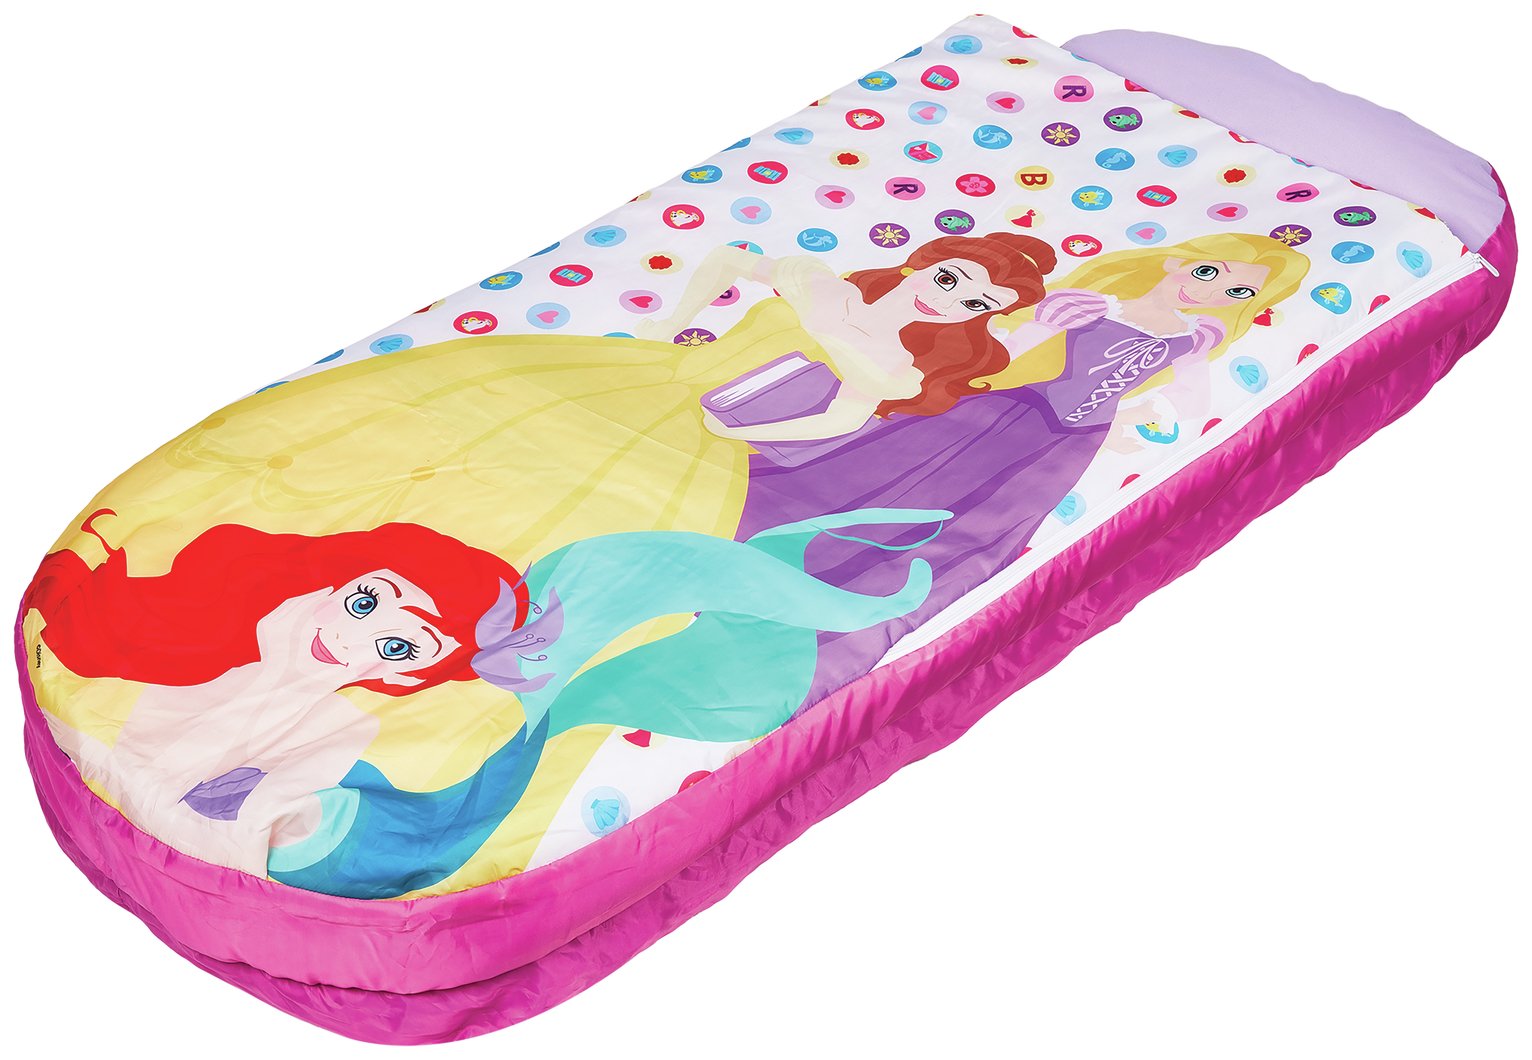 Disney Princess Junior ReadyBed Air Bed and Sleeping Bag